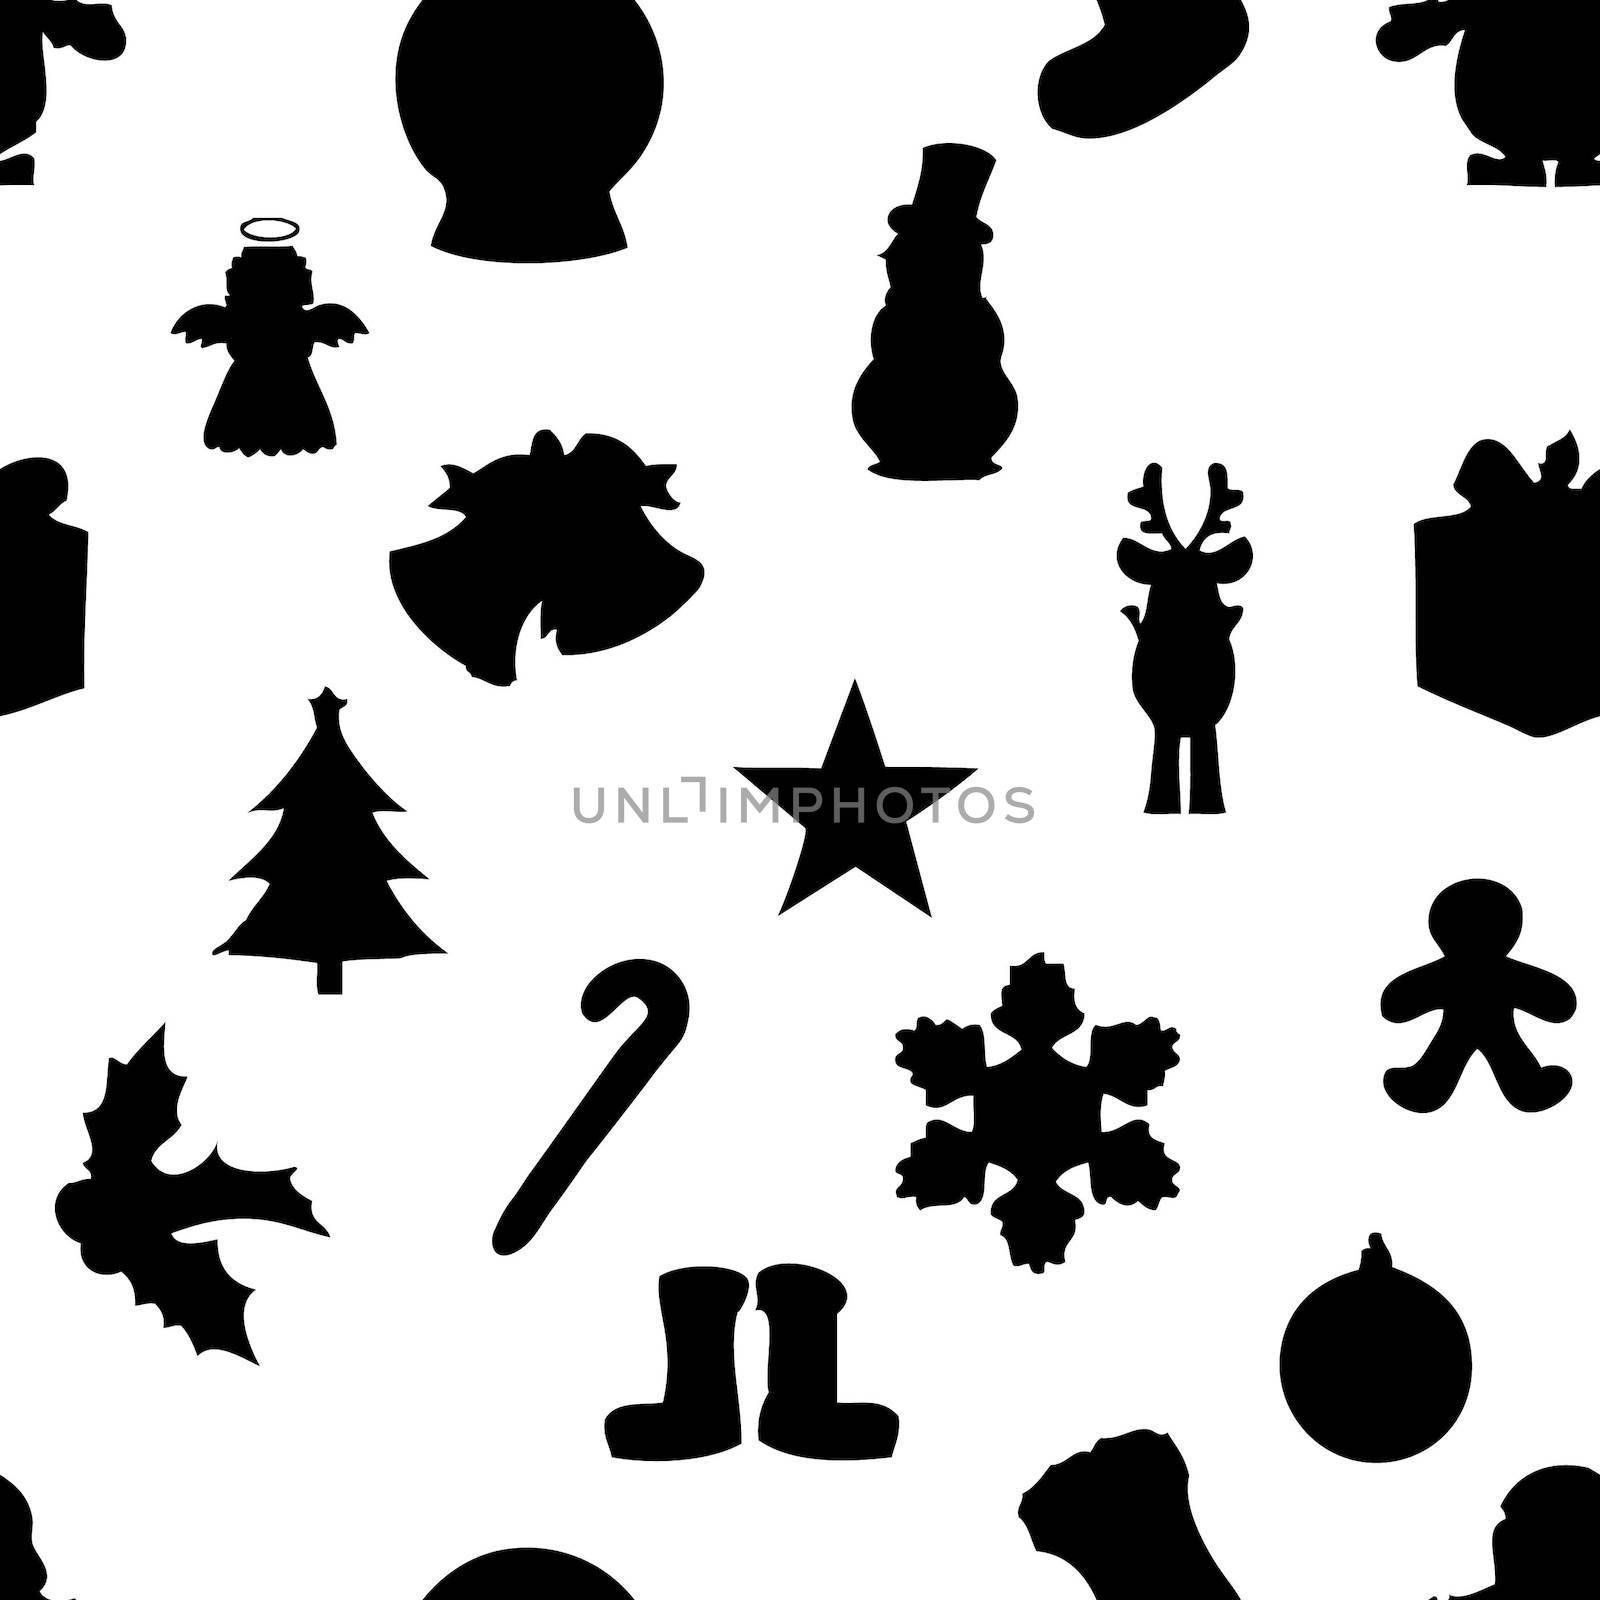 An Illustration of Christmas Icons